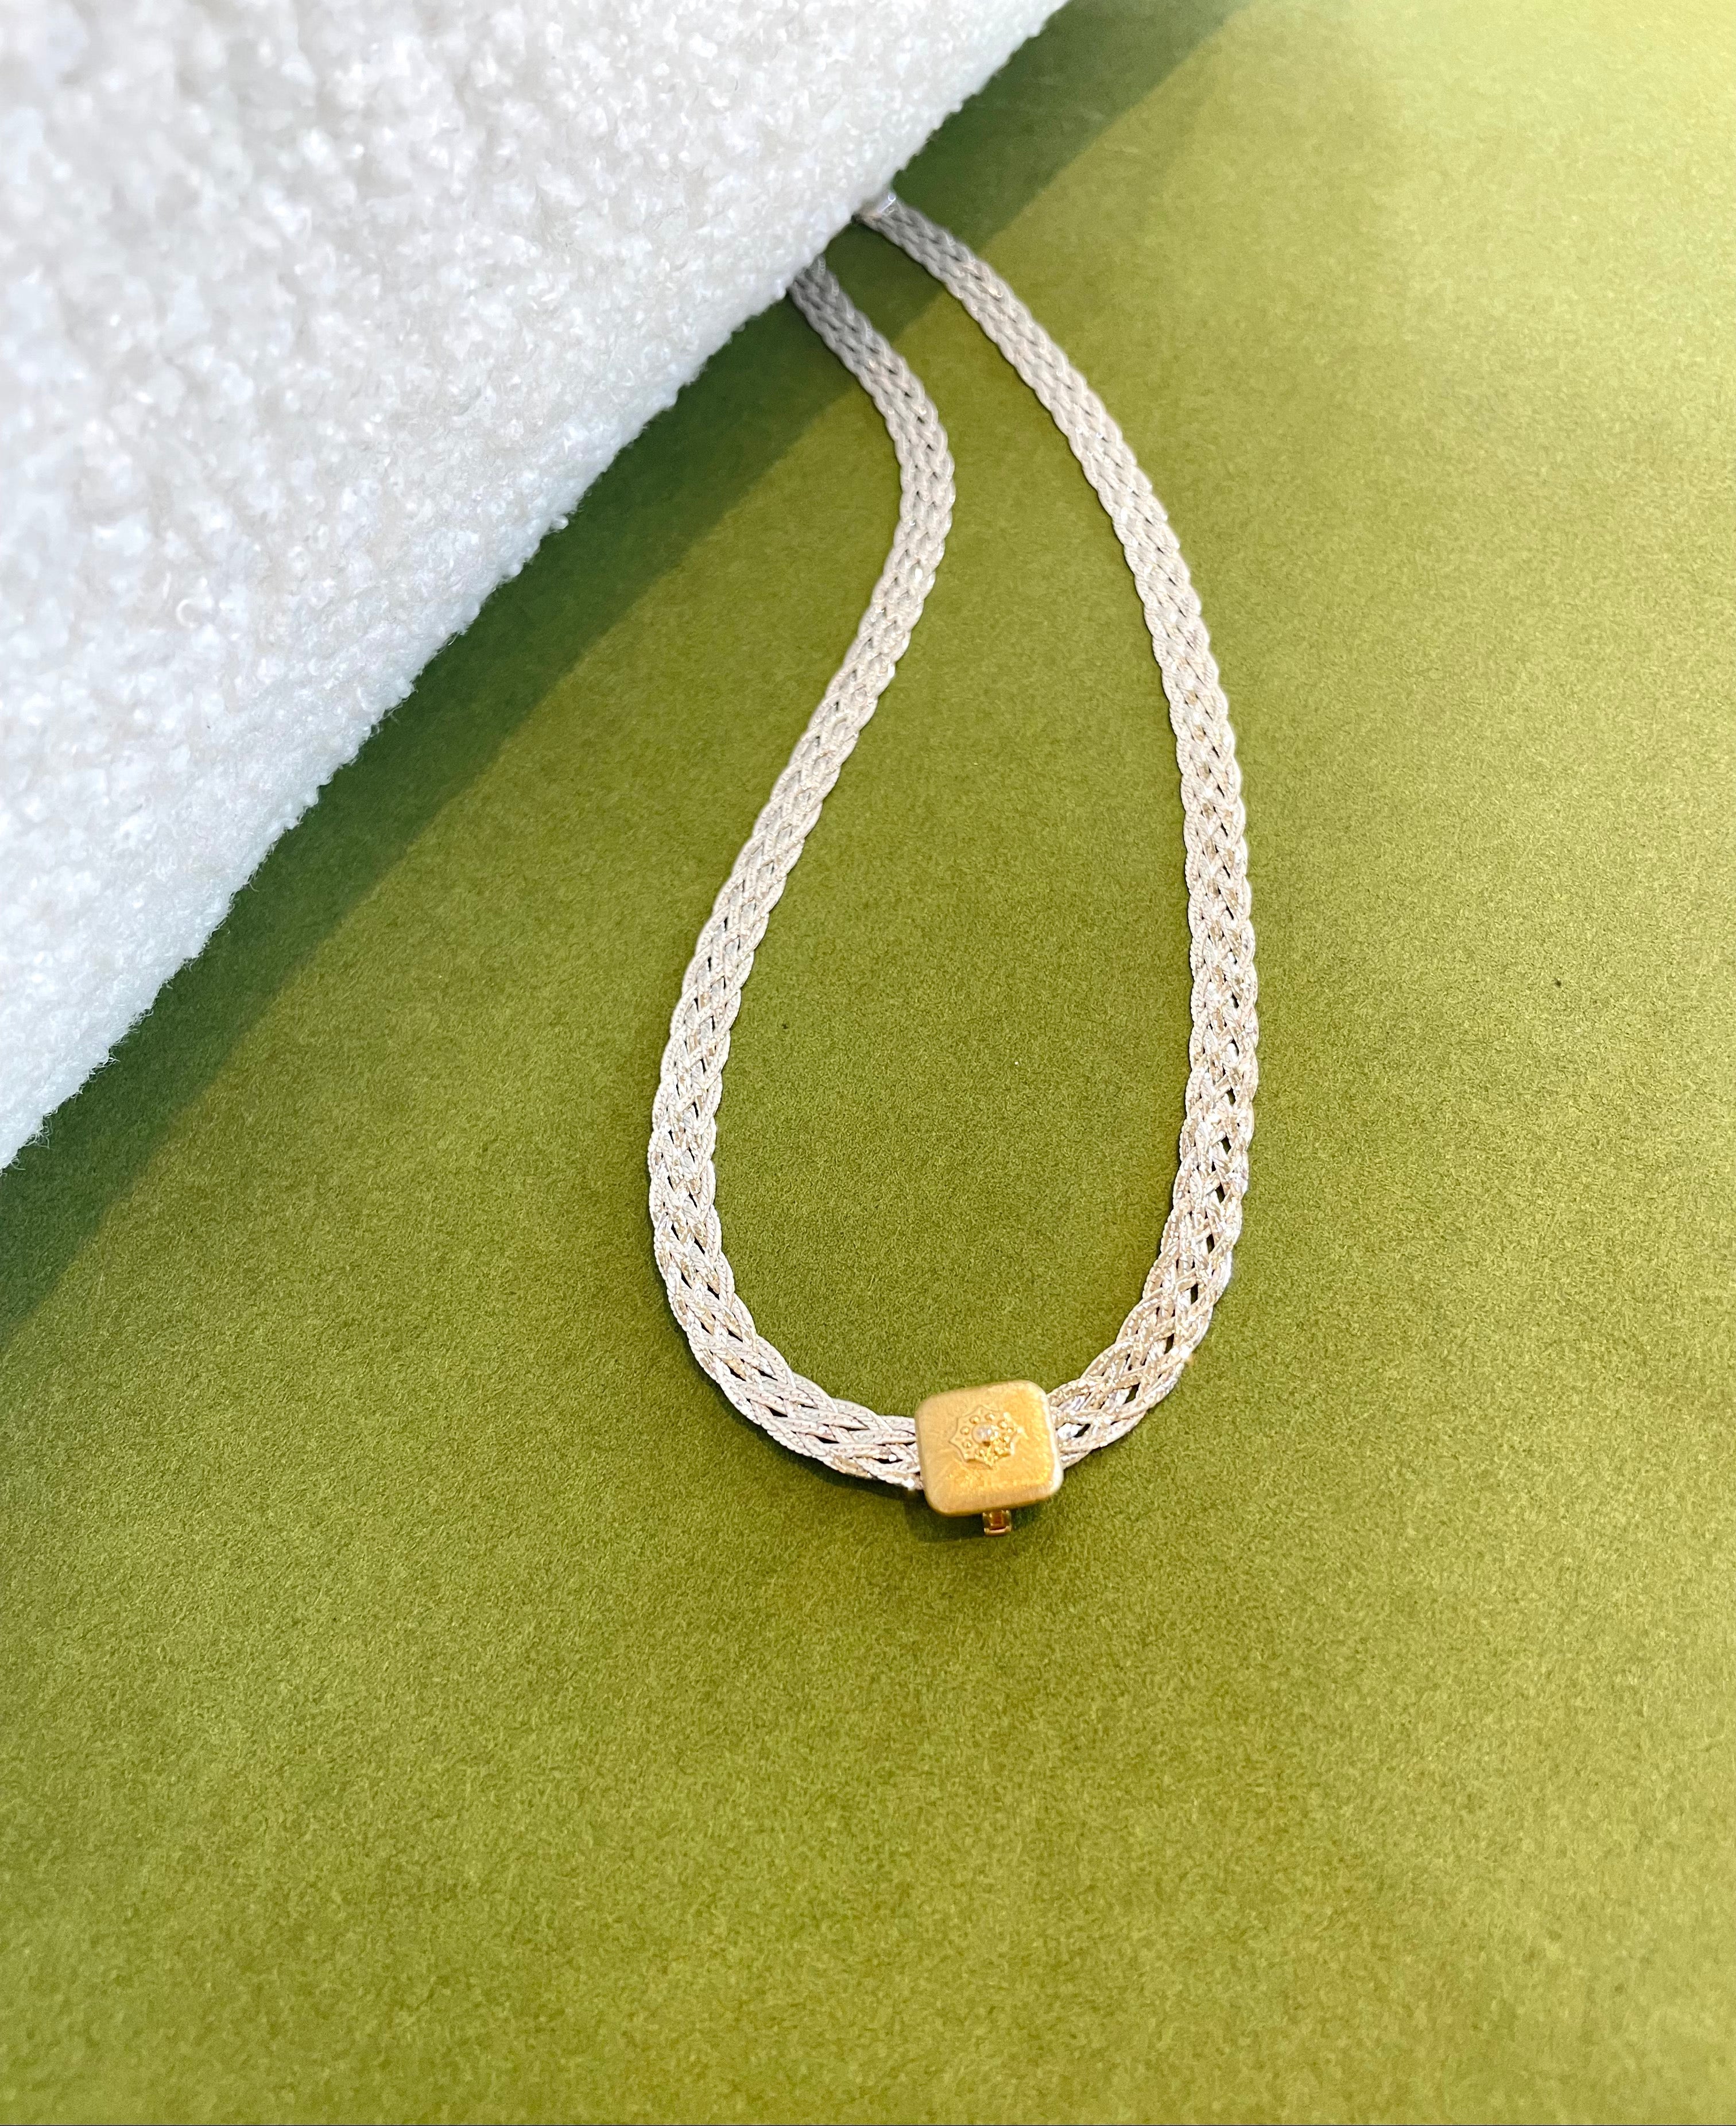 Braided Herringbone Chain Necklace - New Arrivals